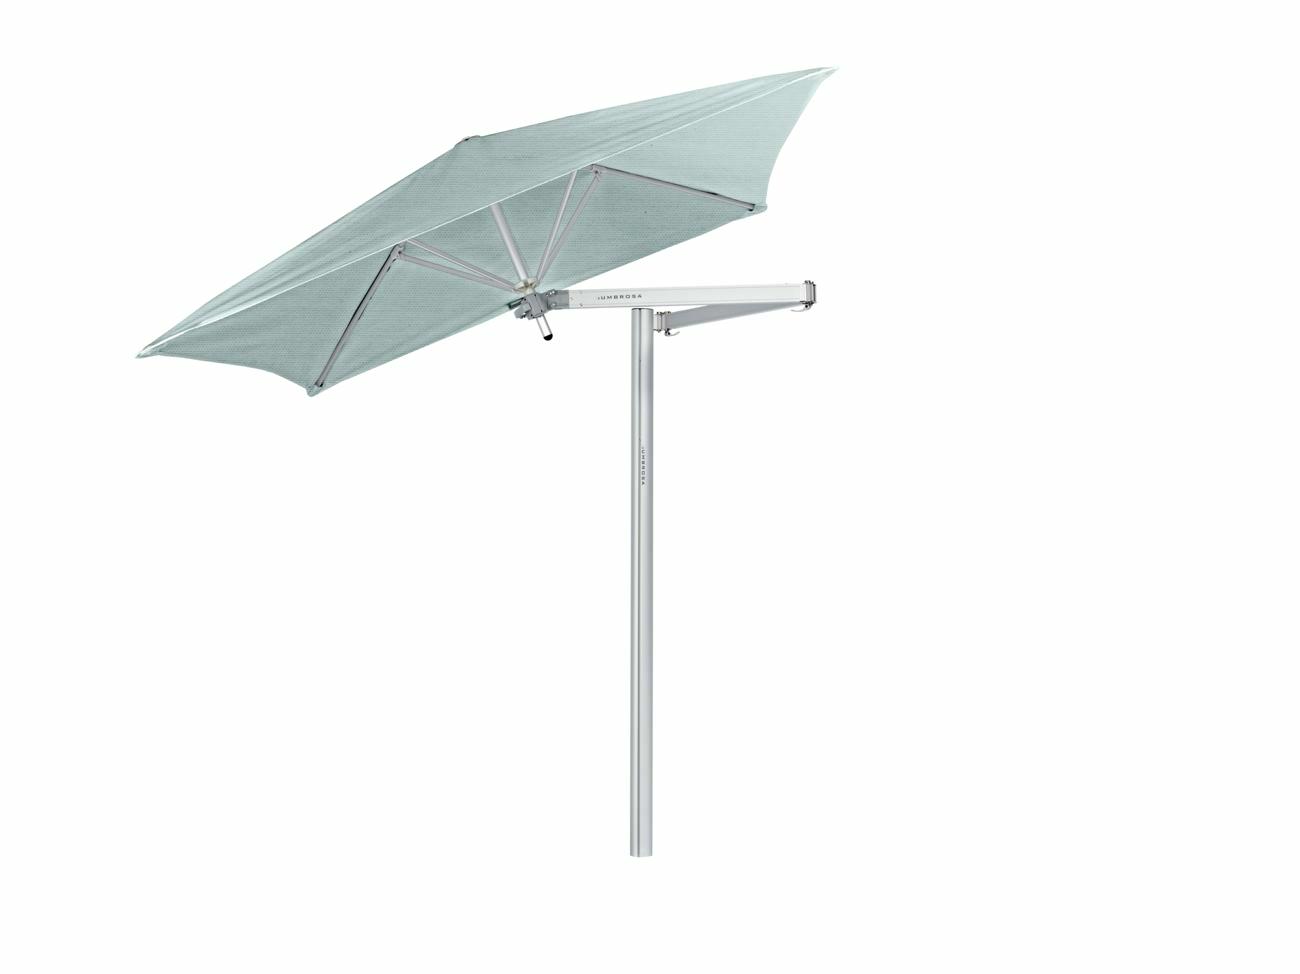 Paraflex cantilever umbrella square 1,9 m with Curacao fabric and a Classic arm